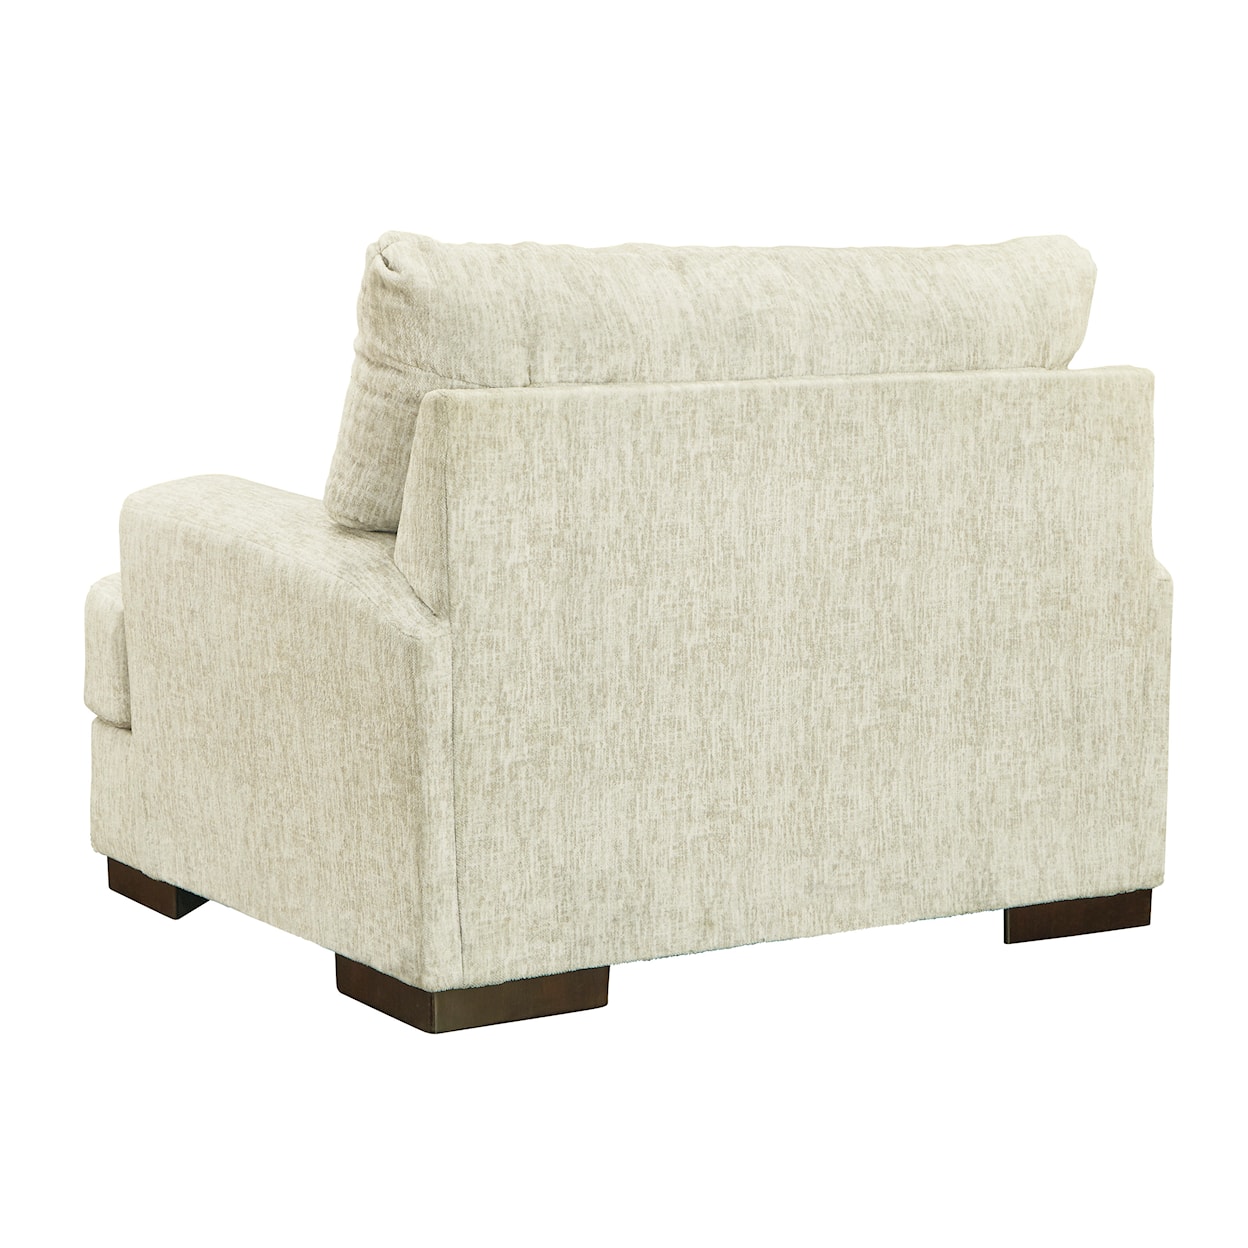 Ashley Furniture Signature Design Caretti Oversized Chair